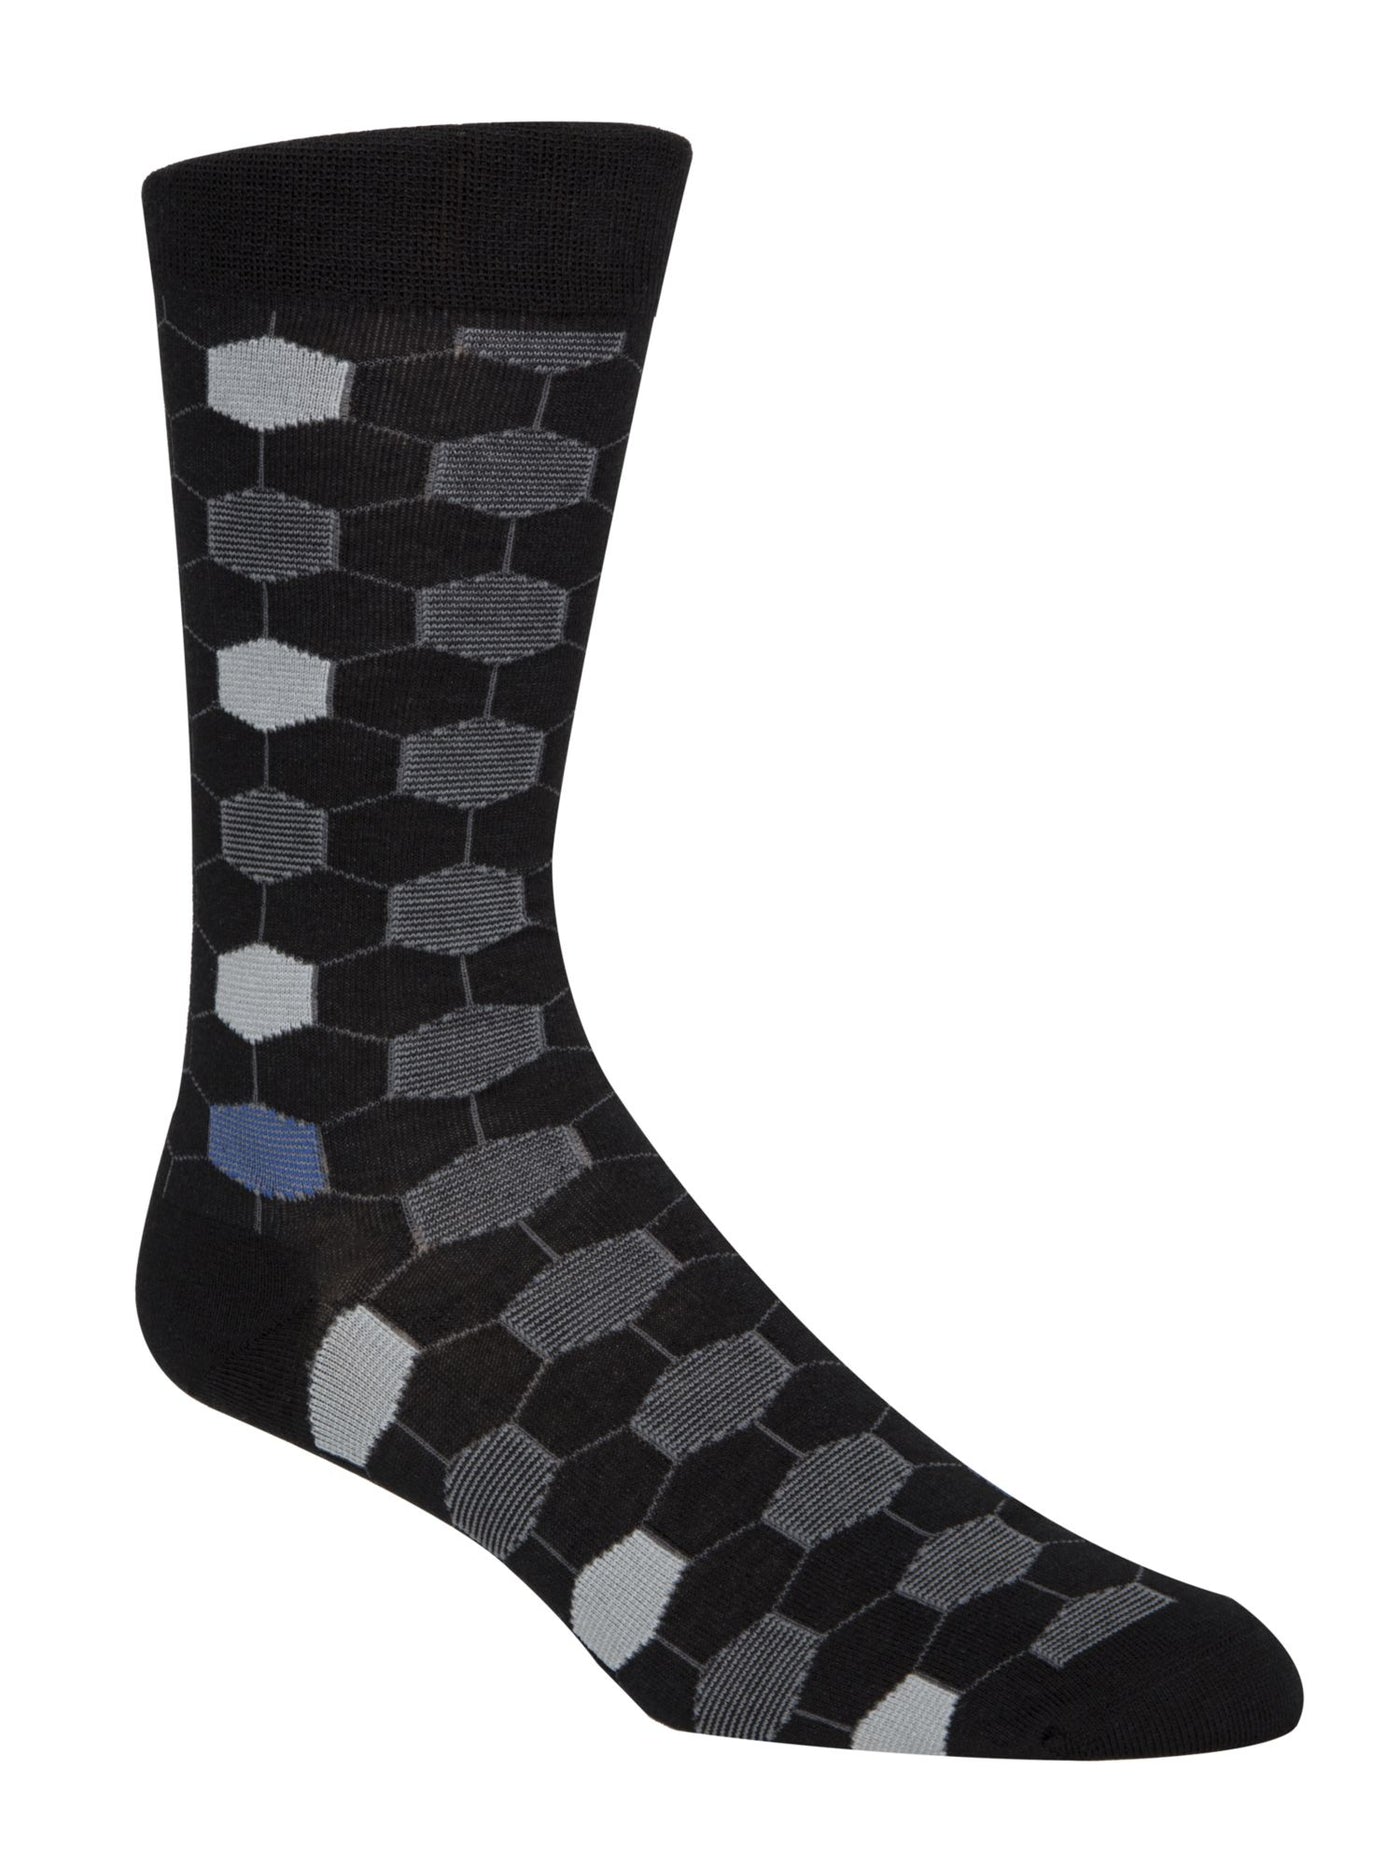 COLE HAAN Black Geometric Dress Crew Socks 7-12